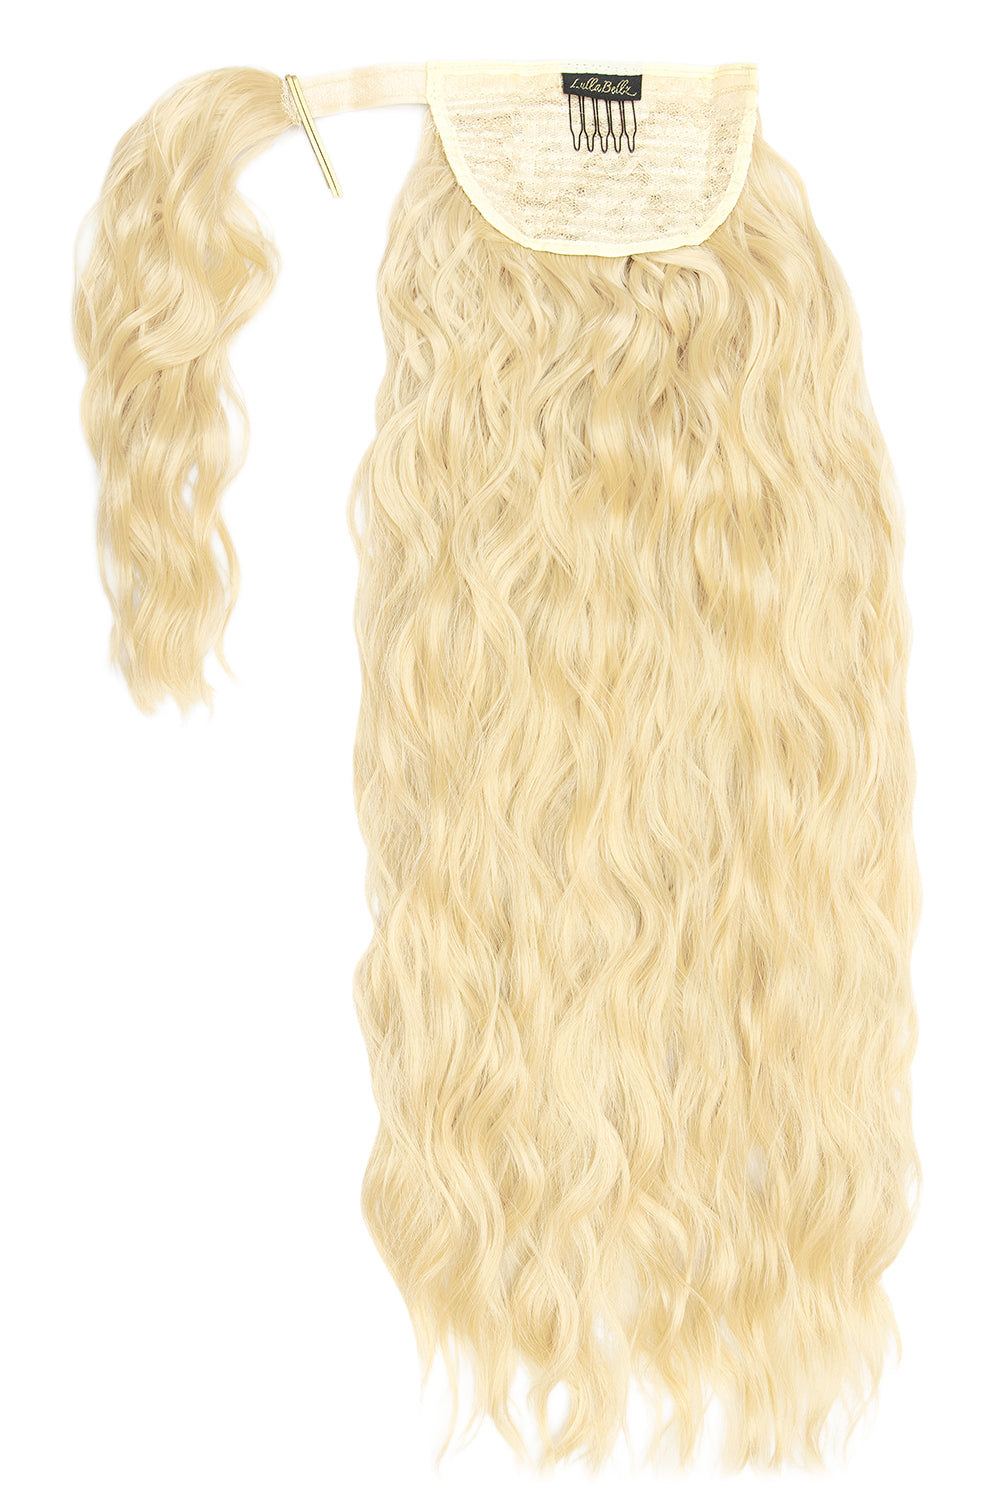 26" Textured Wavy Grande Lengths Wraparound Ponytail - LullaBellz  - Pure Blonde Festival Hair Inspiration